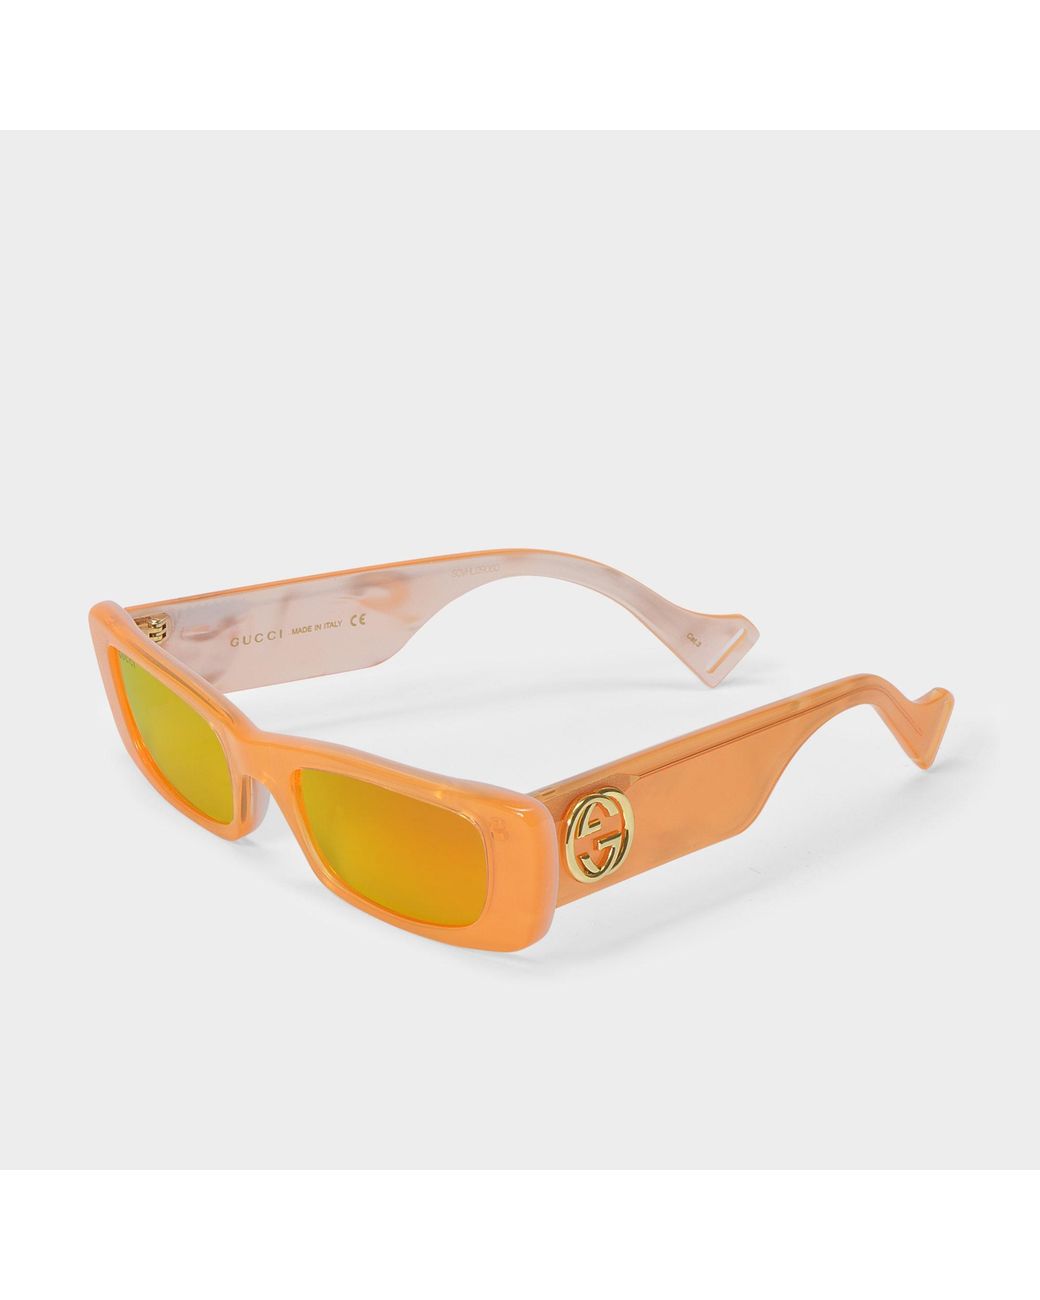 gucci glasses orange lens - OFF-60% > Shipping free